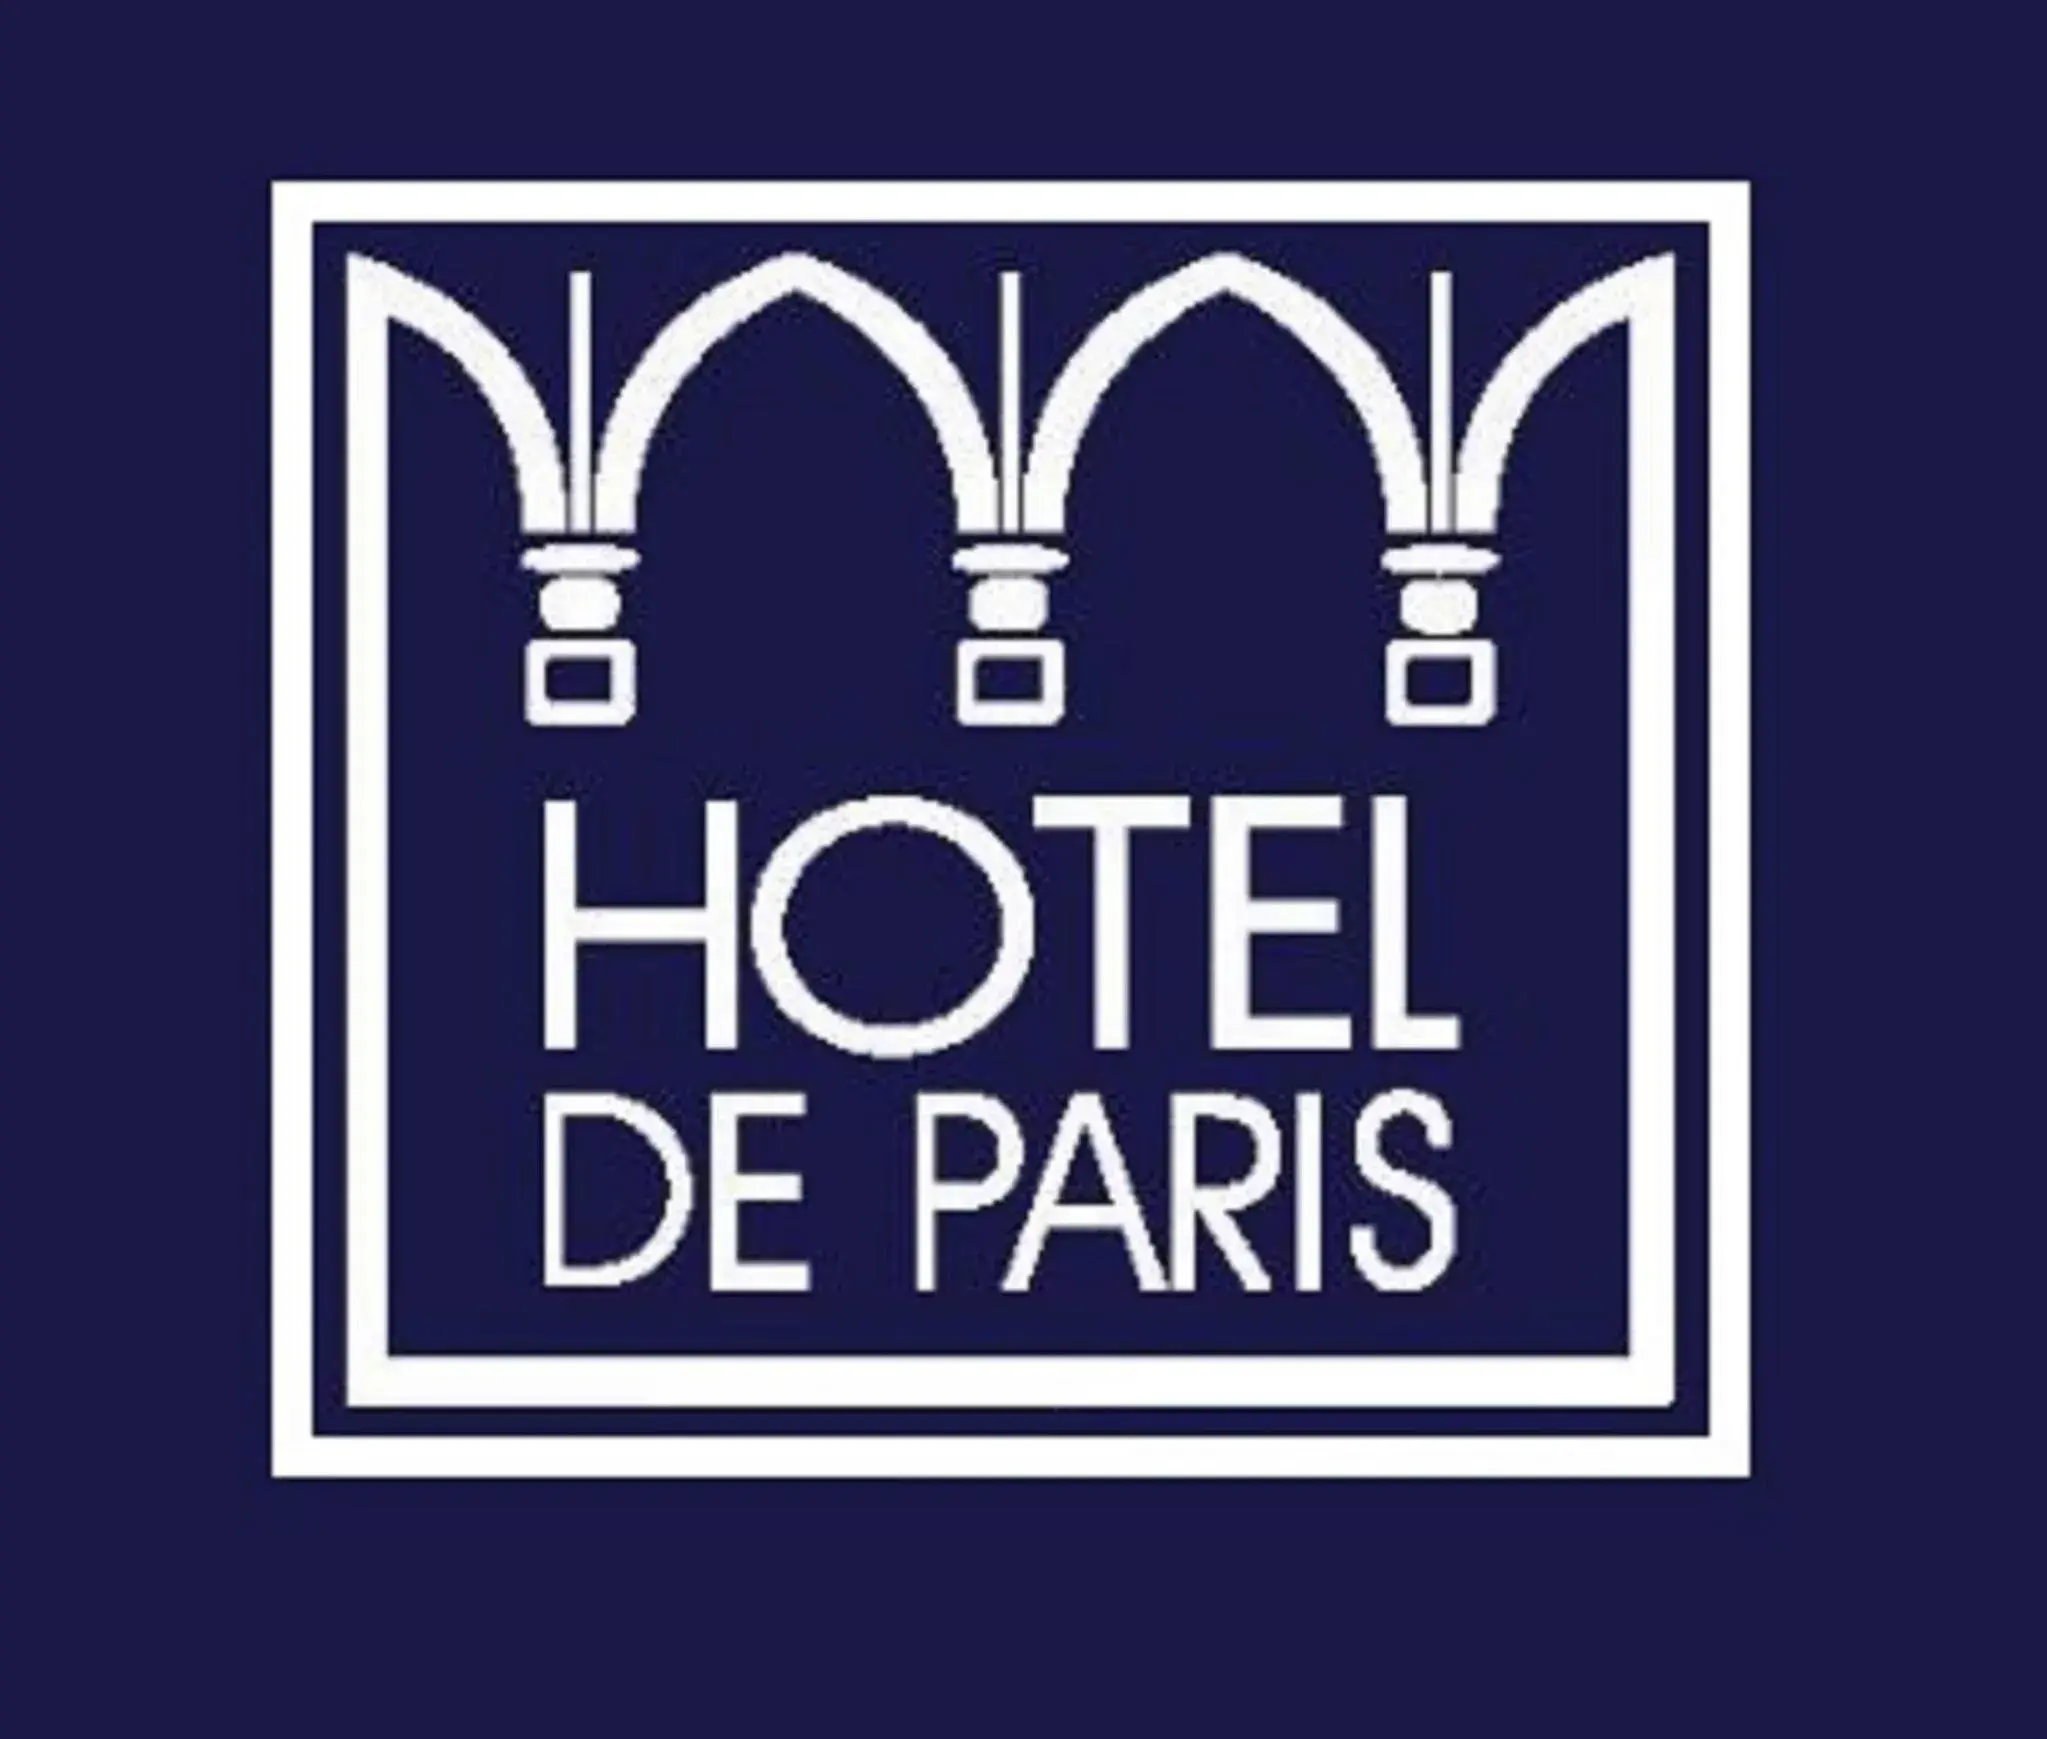 Property logo or sign in Logis Hotel de Paris